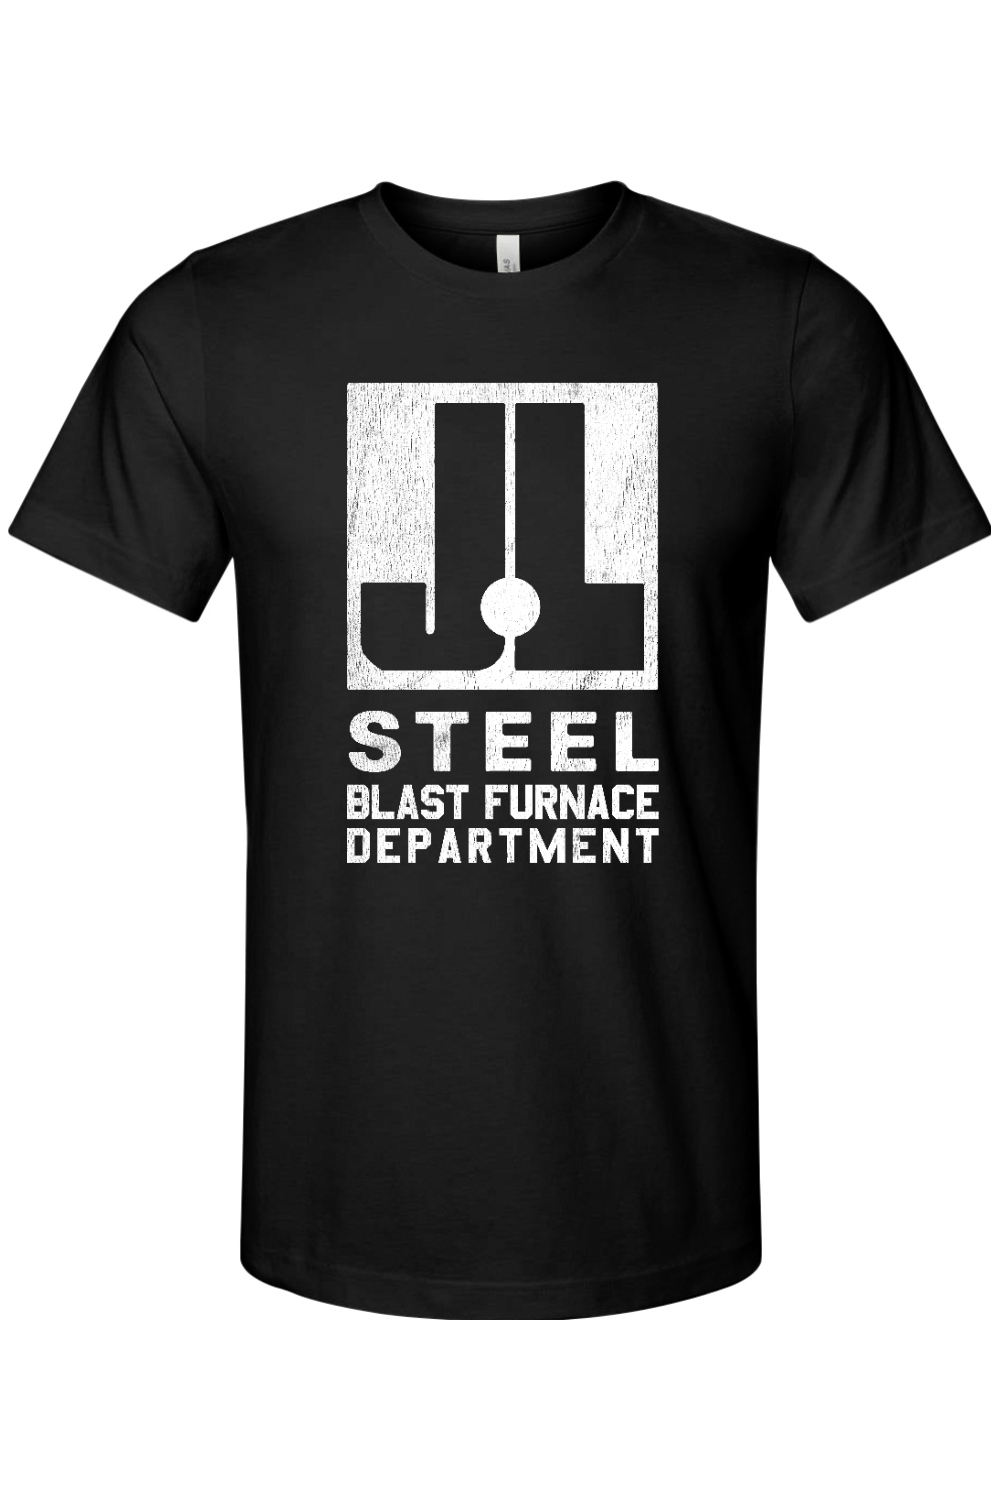 J&L Steel - Blast Furnace Department - Yinzylvania